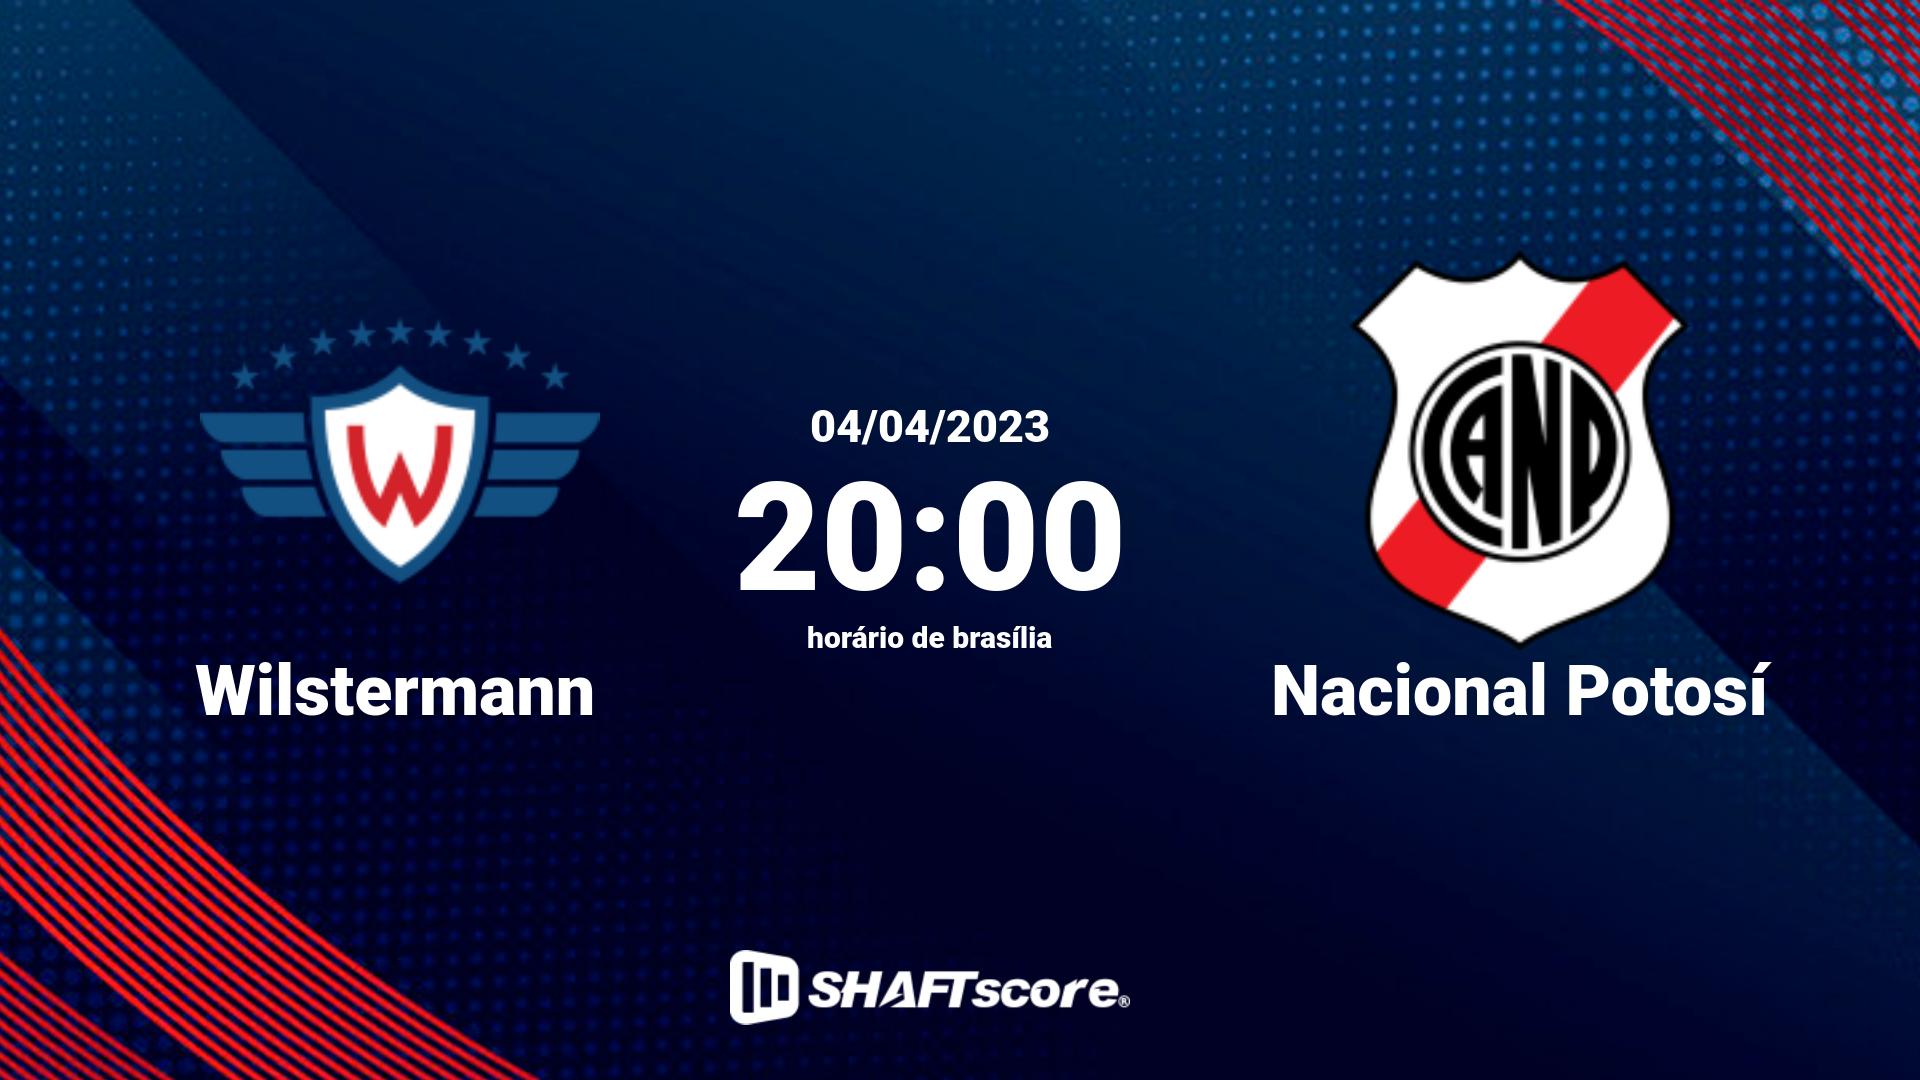 Estatísticas do jogo Wilstermann vs Nacional Potosí 04.04 20:00